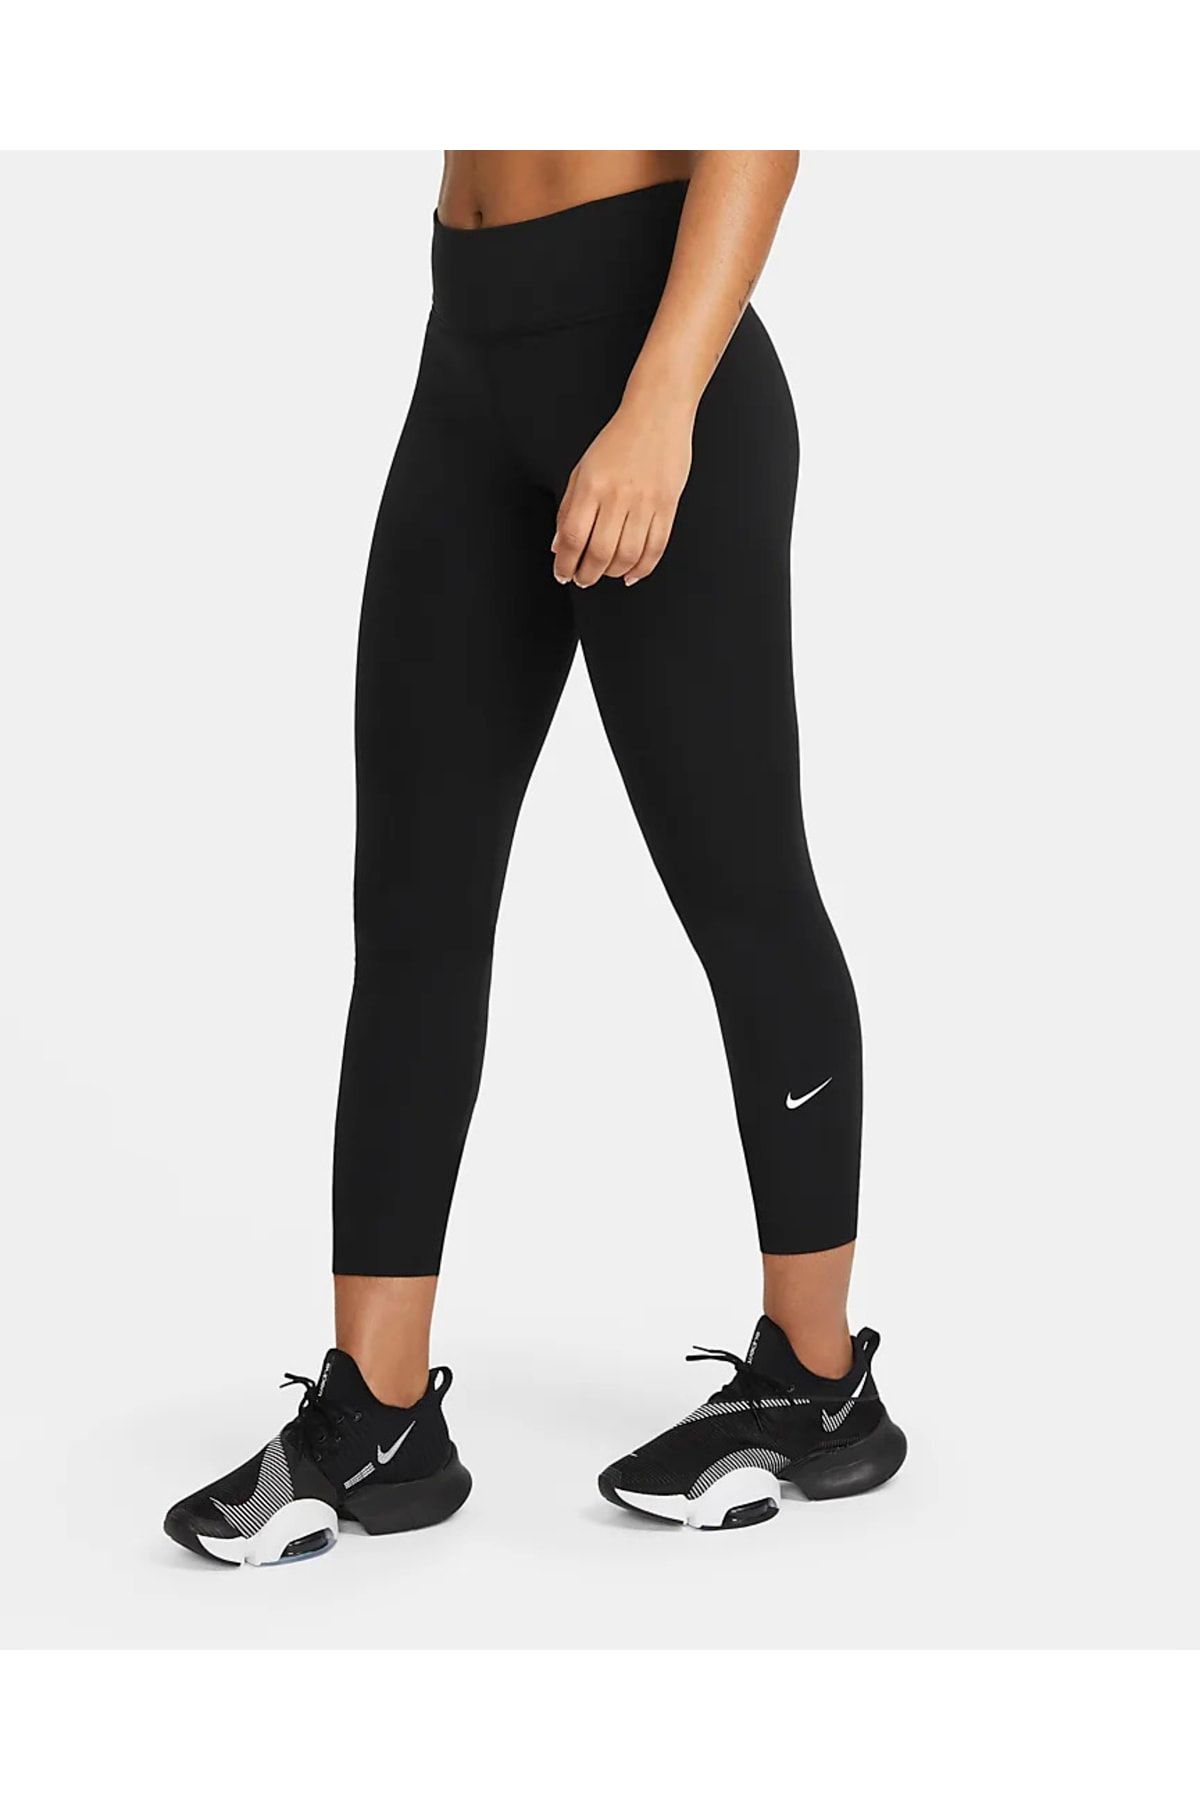 Nike One Normal Belli Bilek Üstü Kadın Taytı Dd0247-010